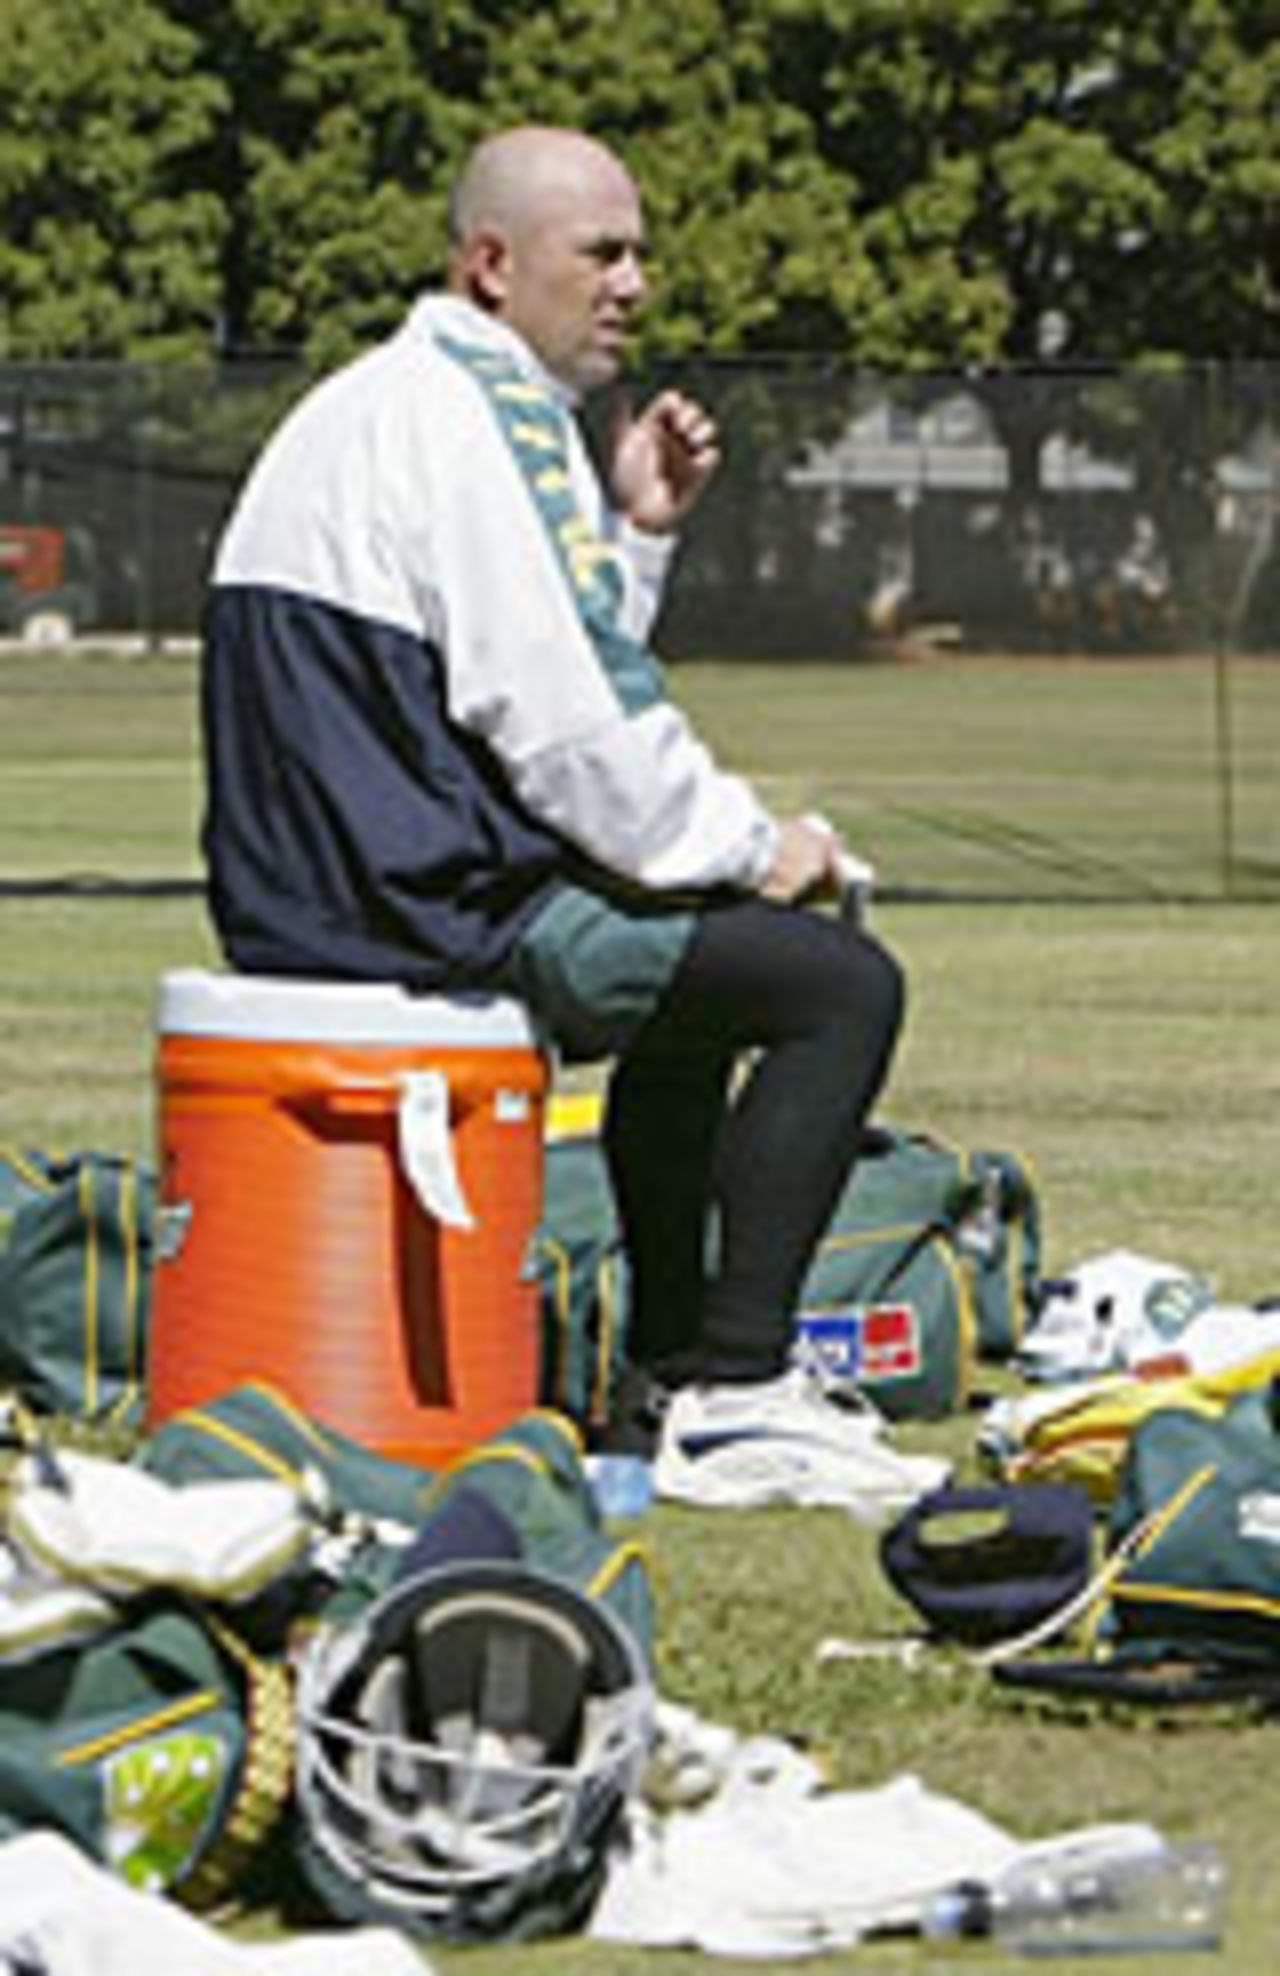 Darren Lehmann looks on as the Australian ODI squad train at Harare, May 23, 2004